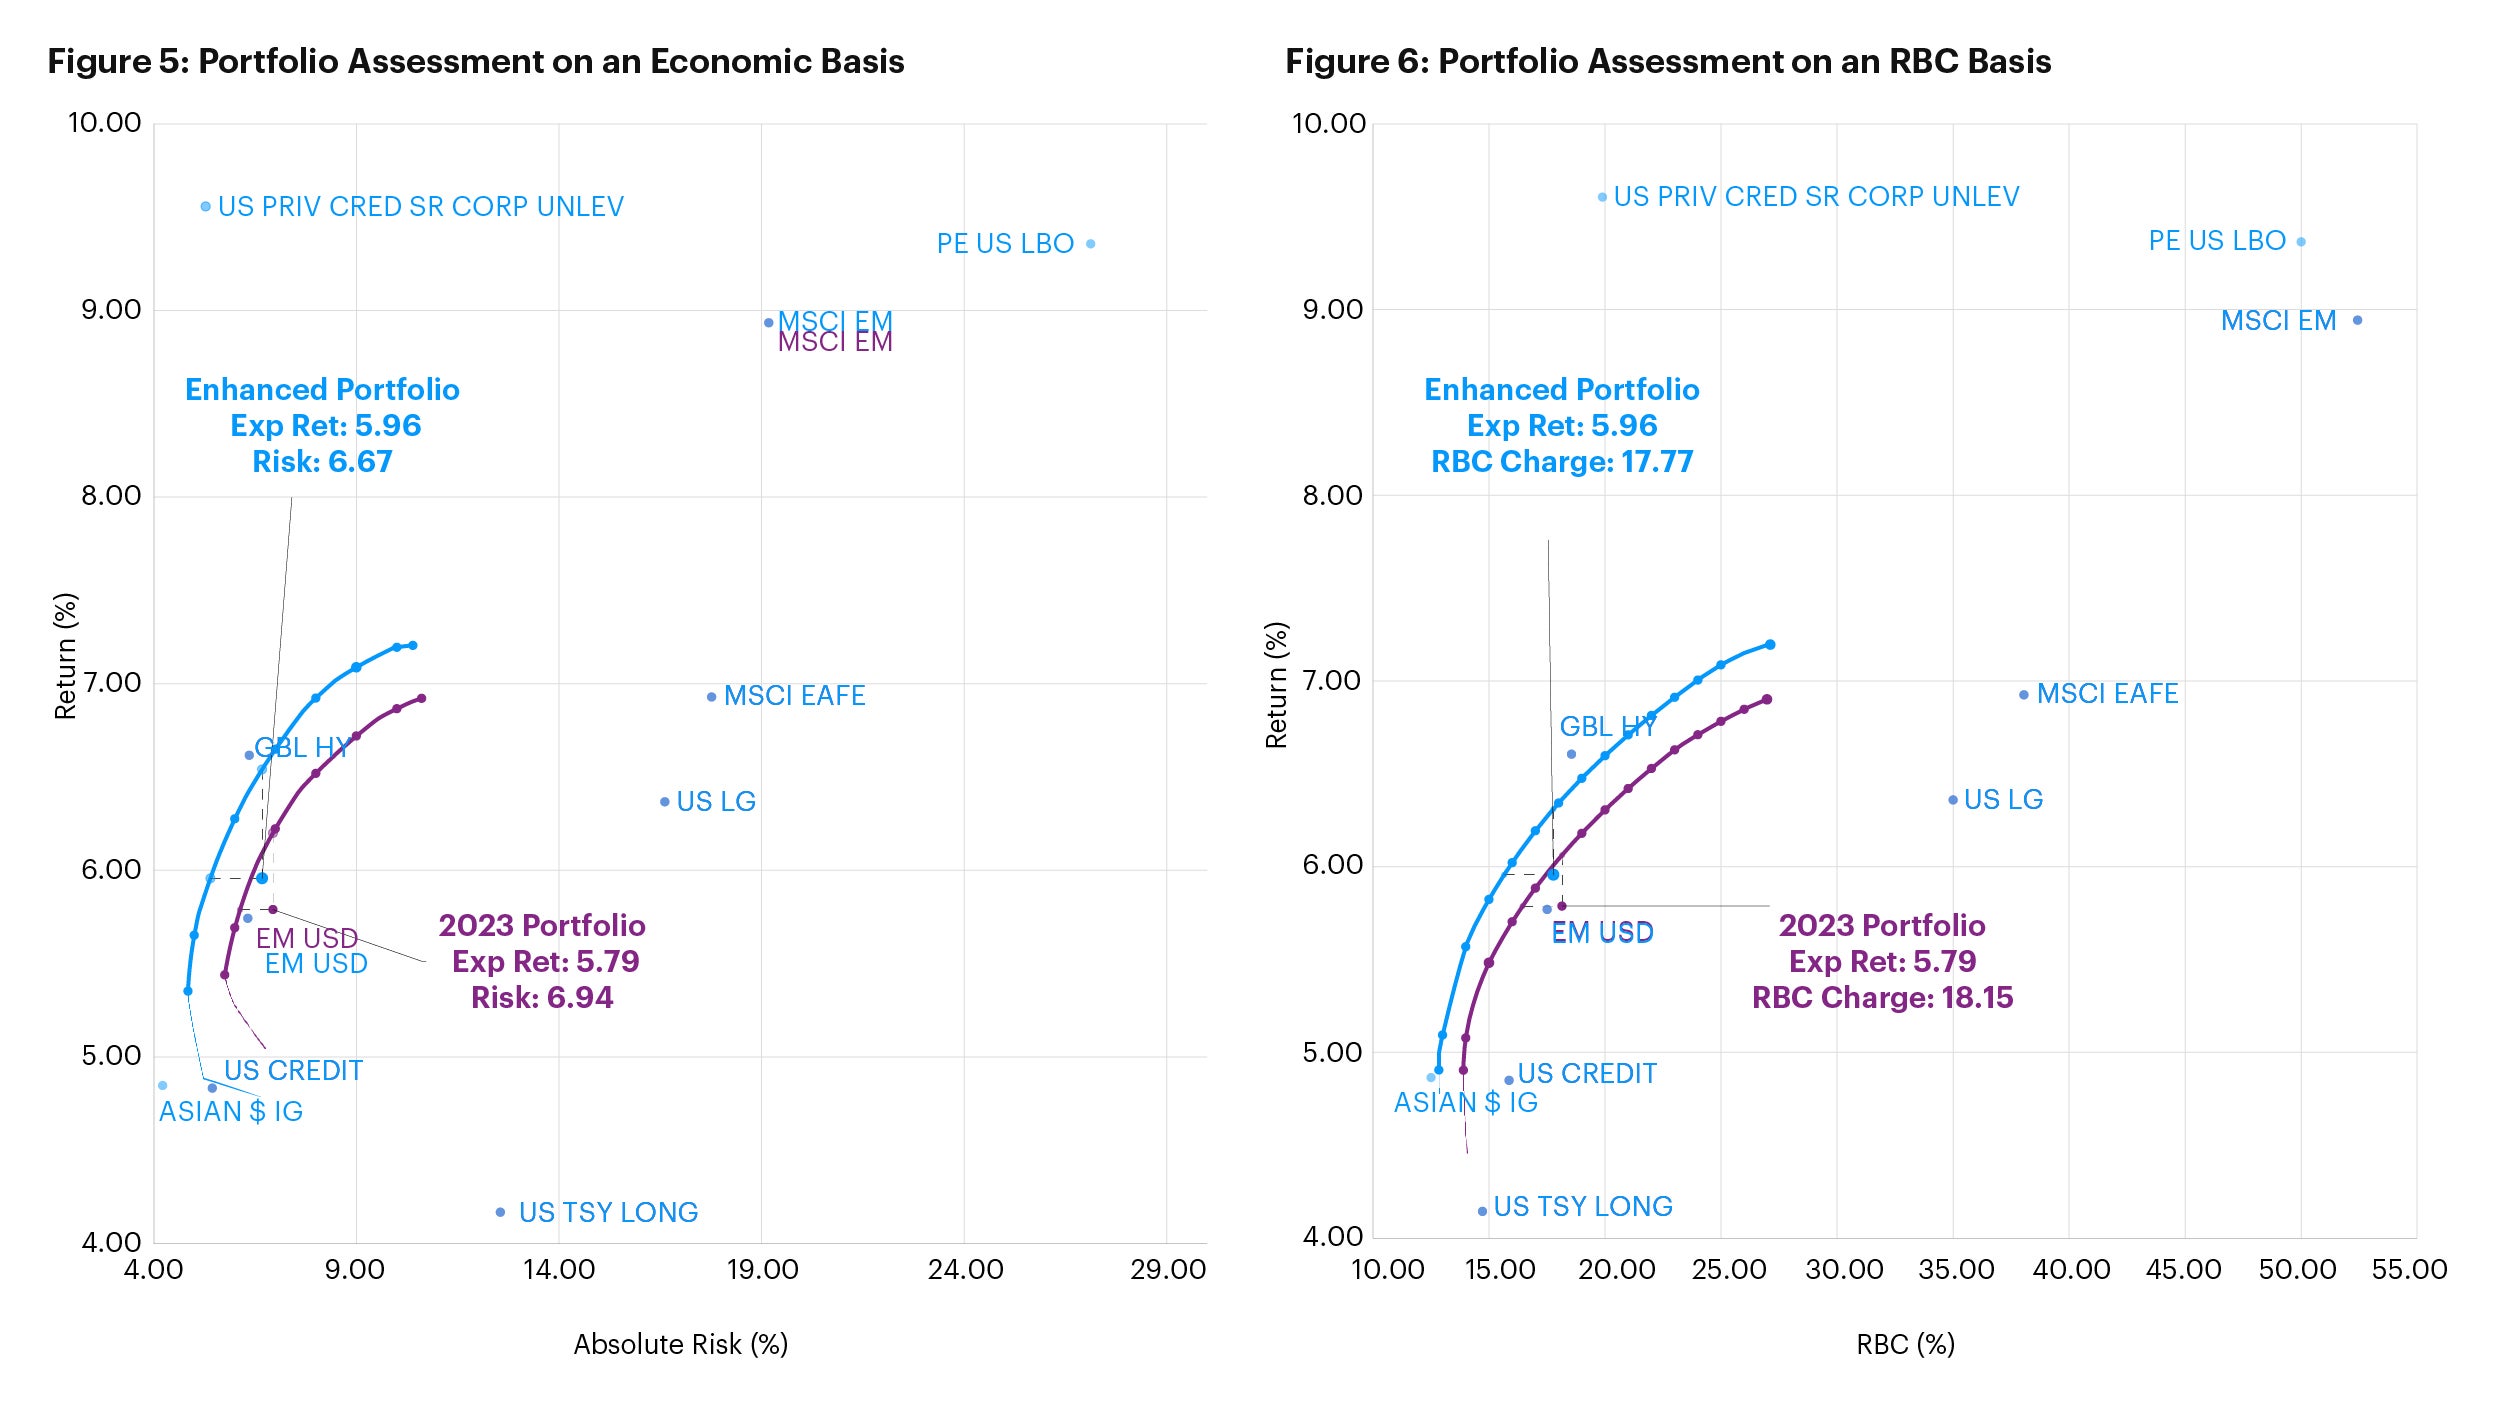 A comparison of an enhanced portfolio (with new asset classes) compared to the original hypothetical base portfolio